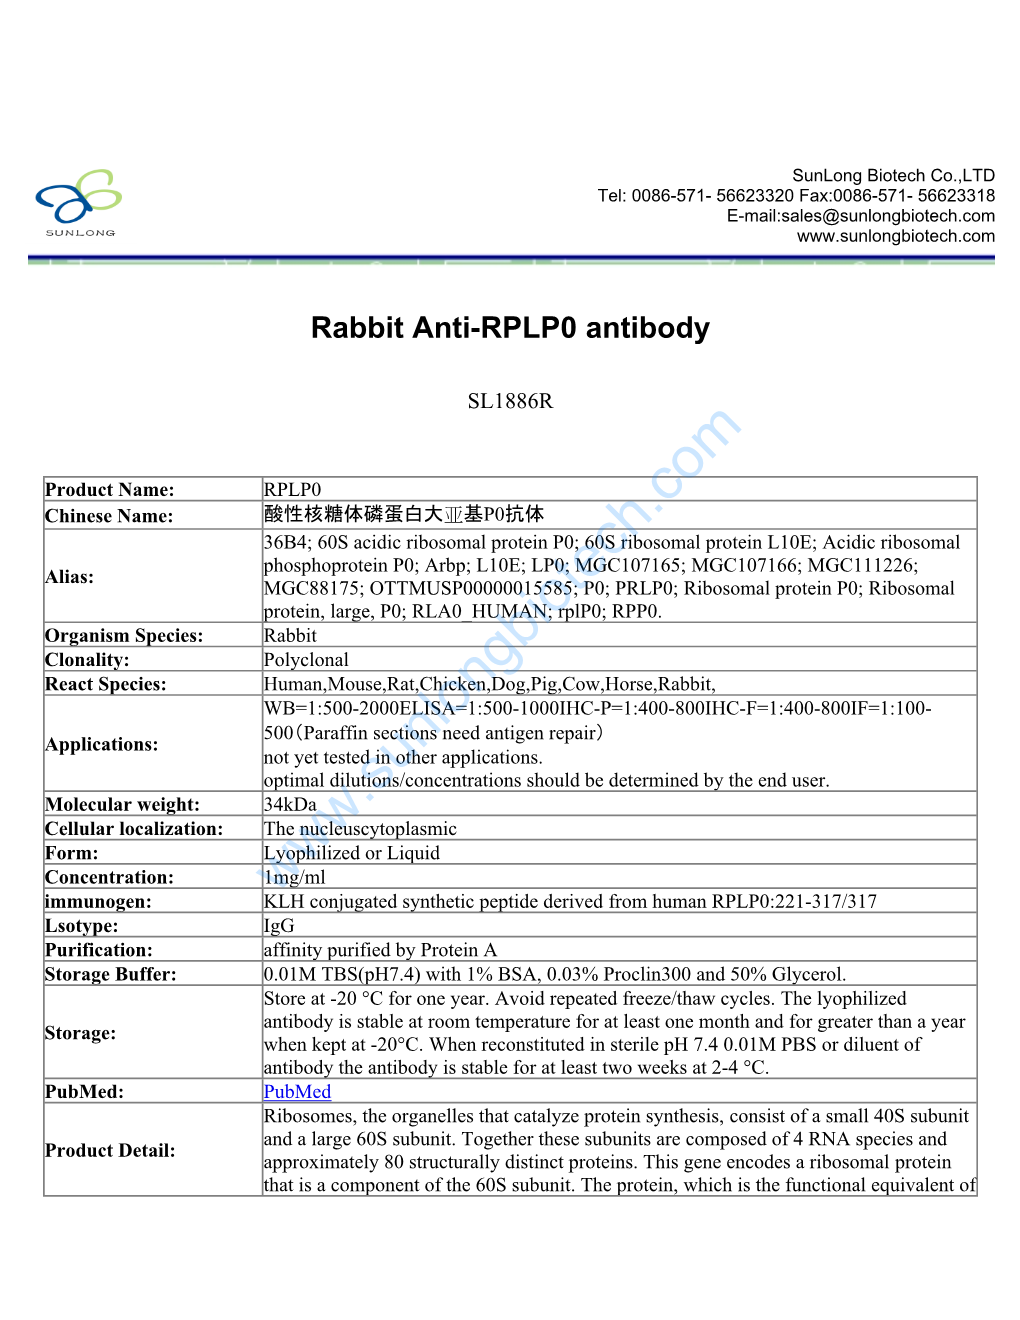 Rabbit Anti-RPLP0 Antibody-SL1886R